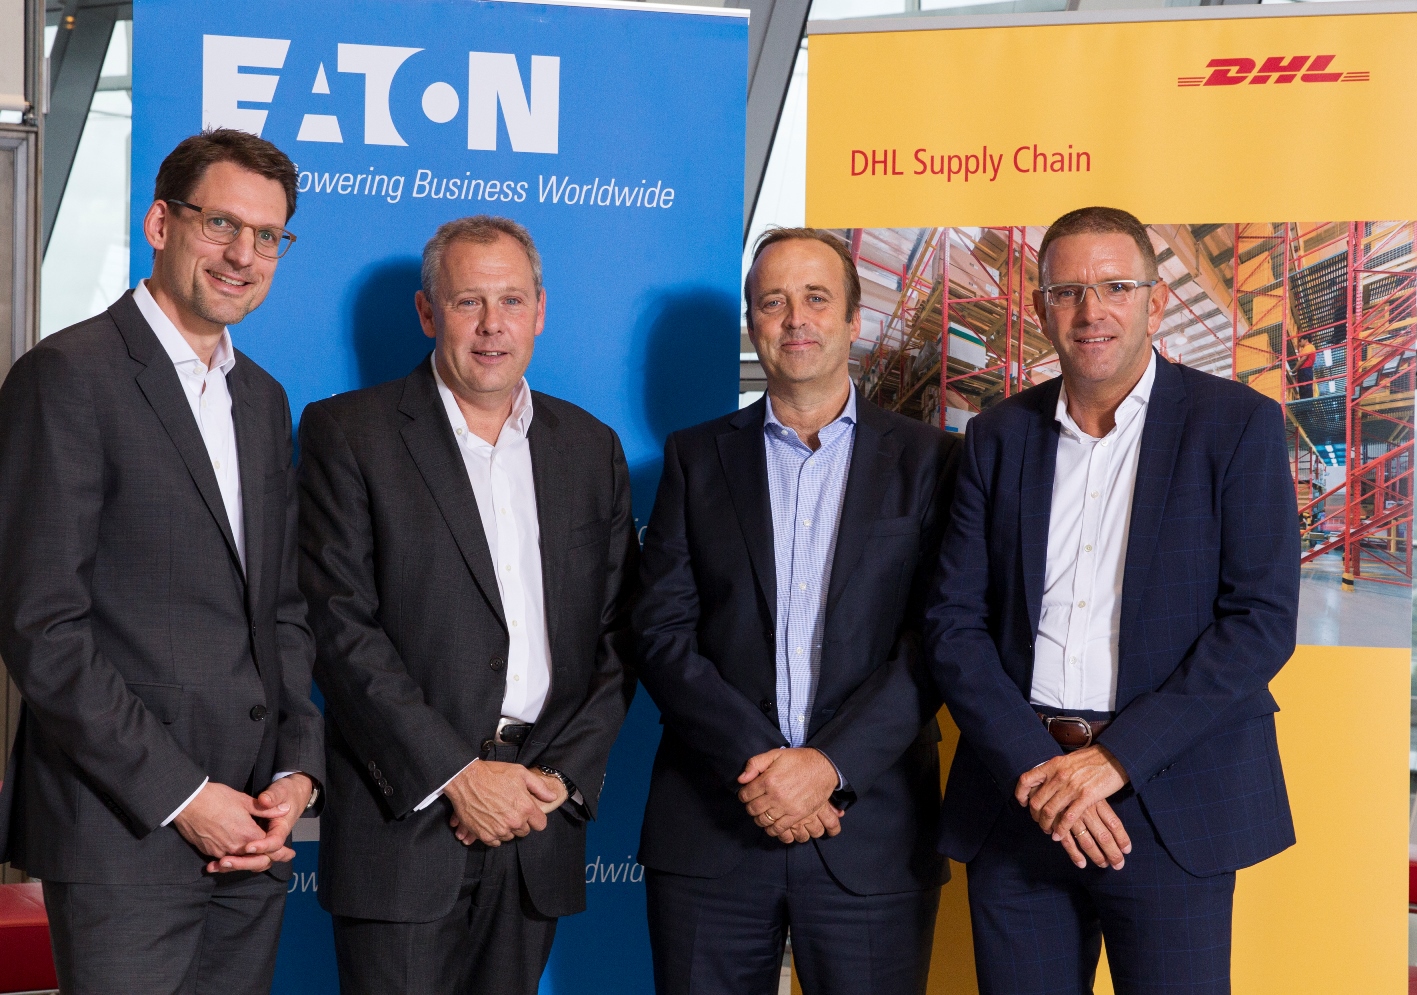 Europa-Logistik von Eaton wandert zu DHL Supply Chain